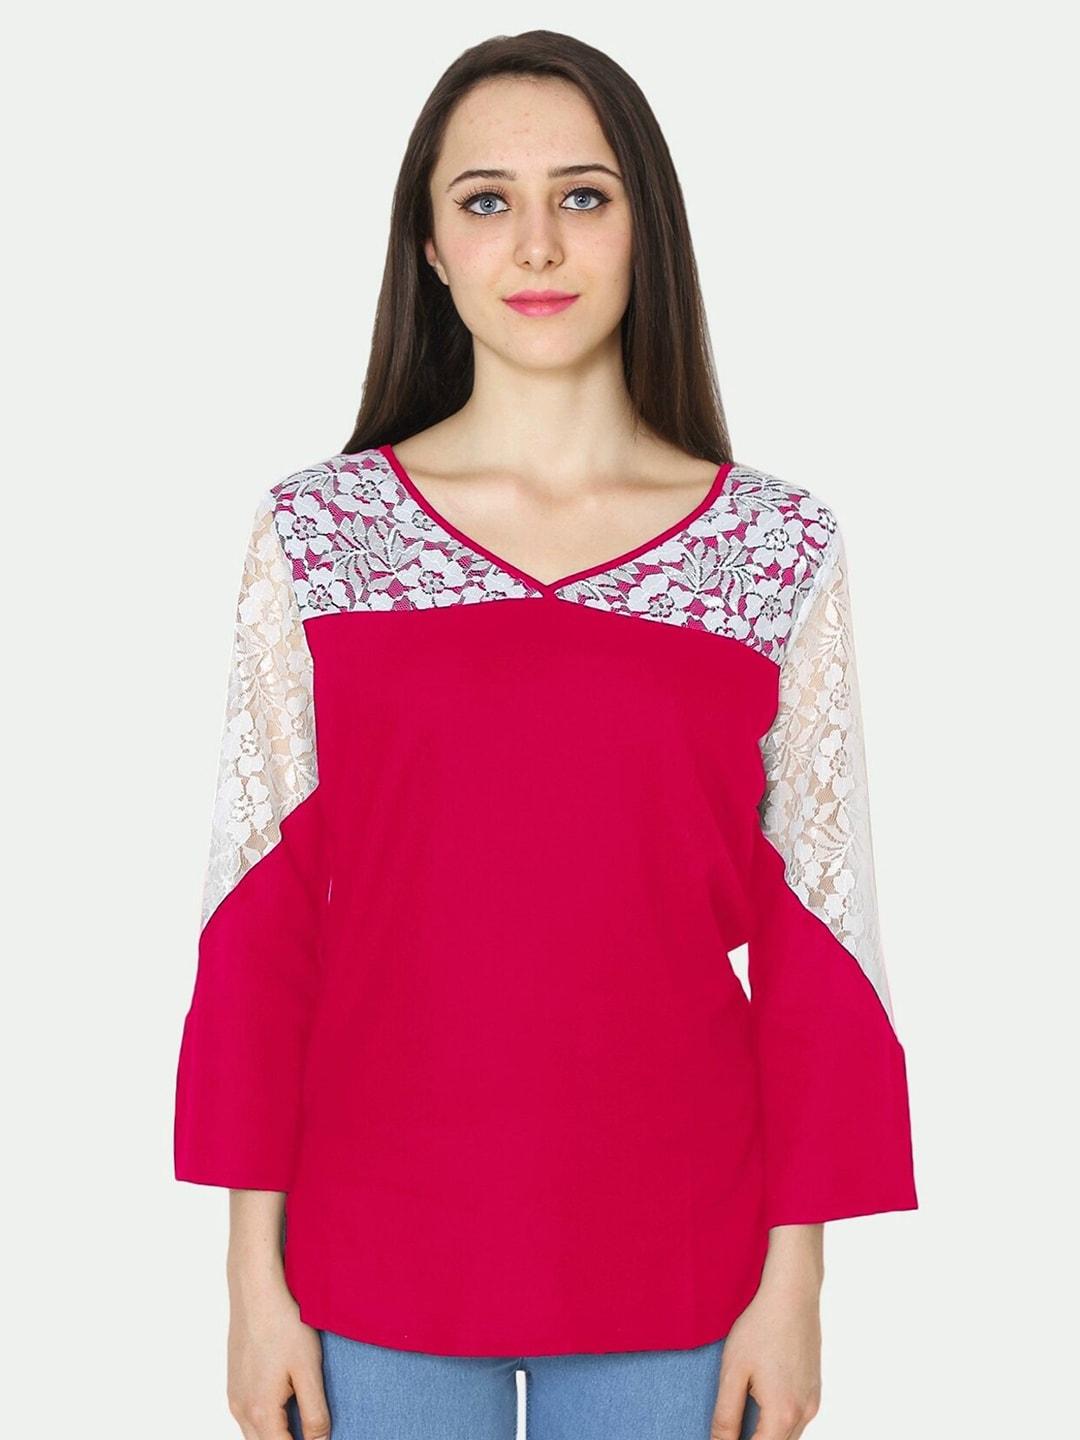 patrorna-woman-pink-lace-regular-top